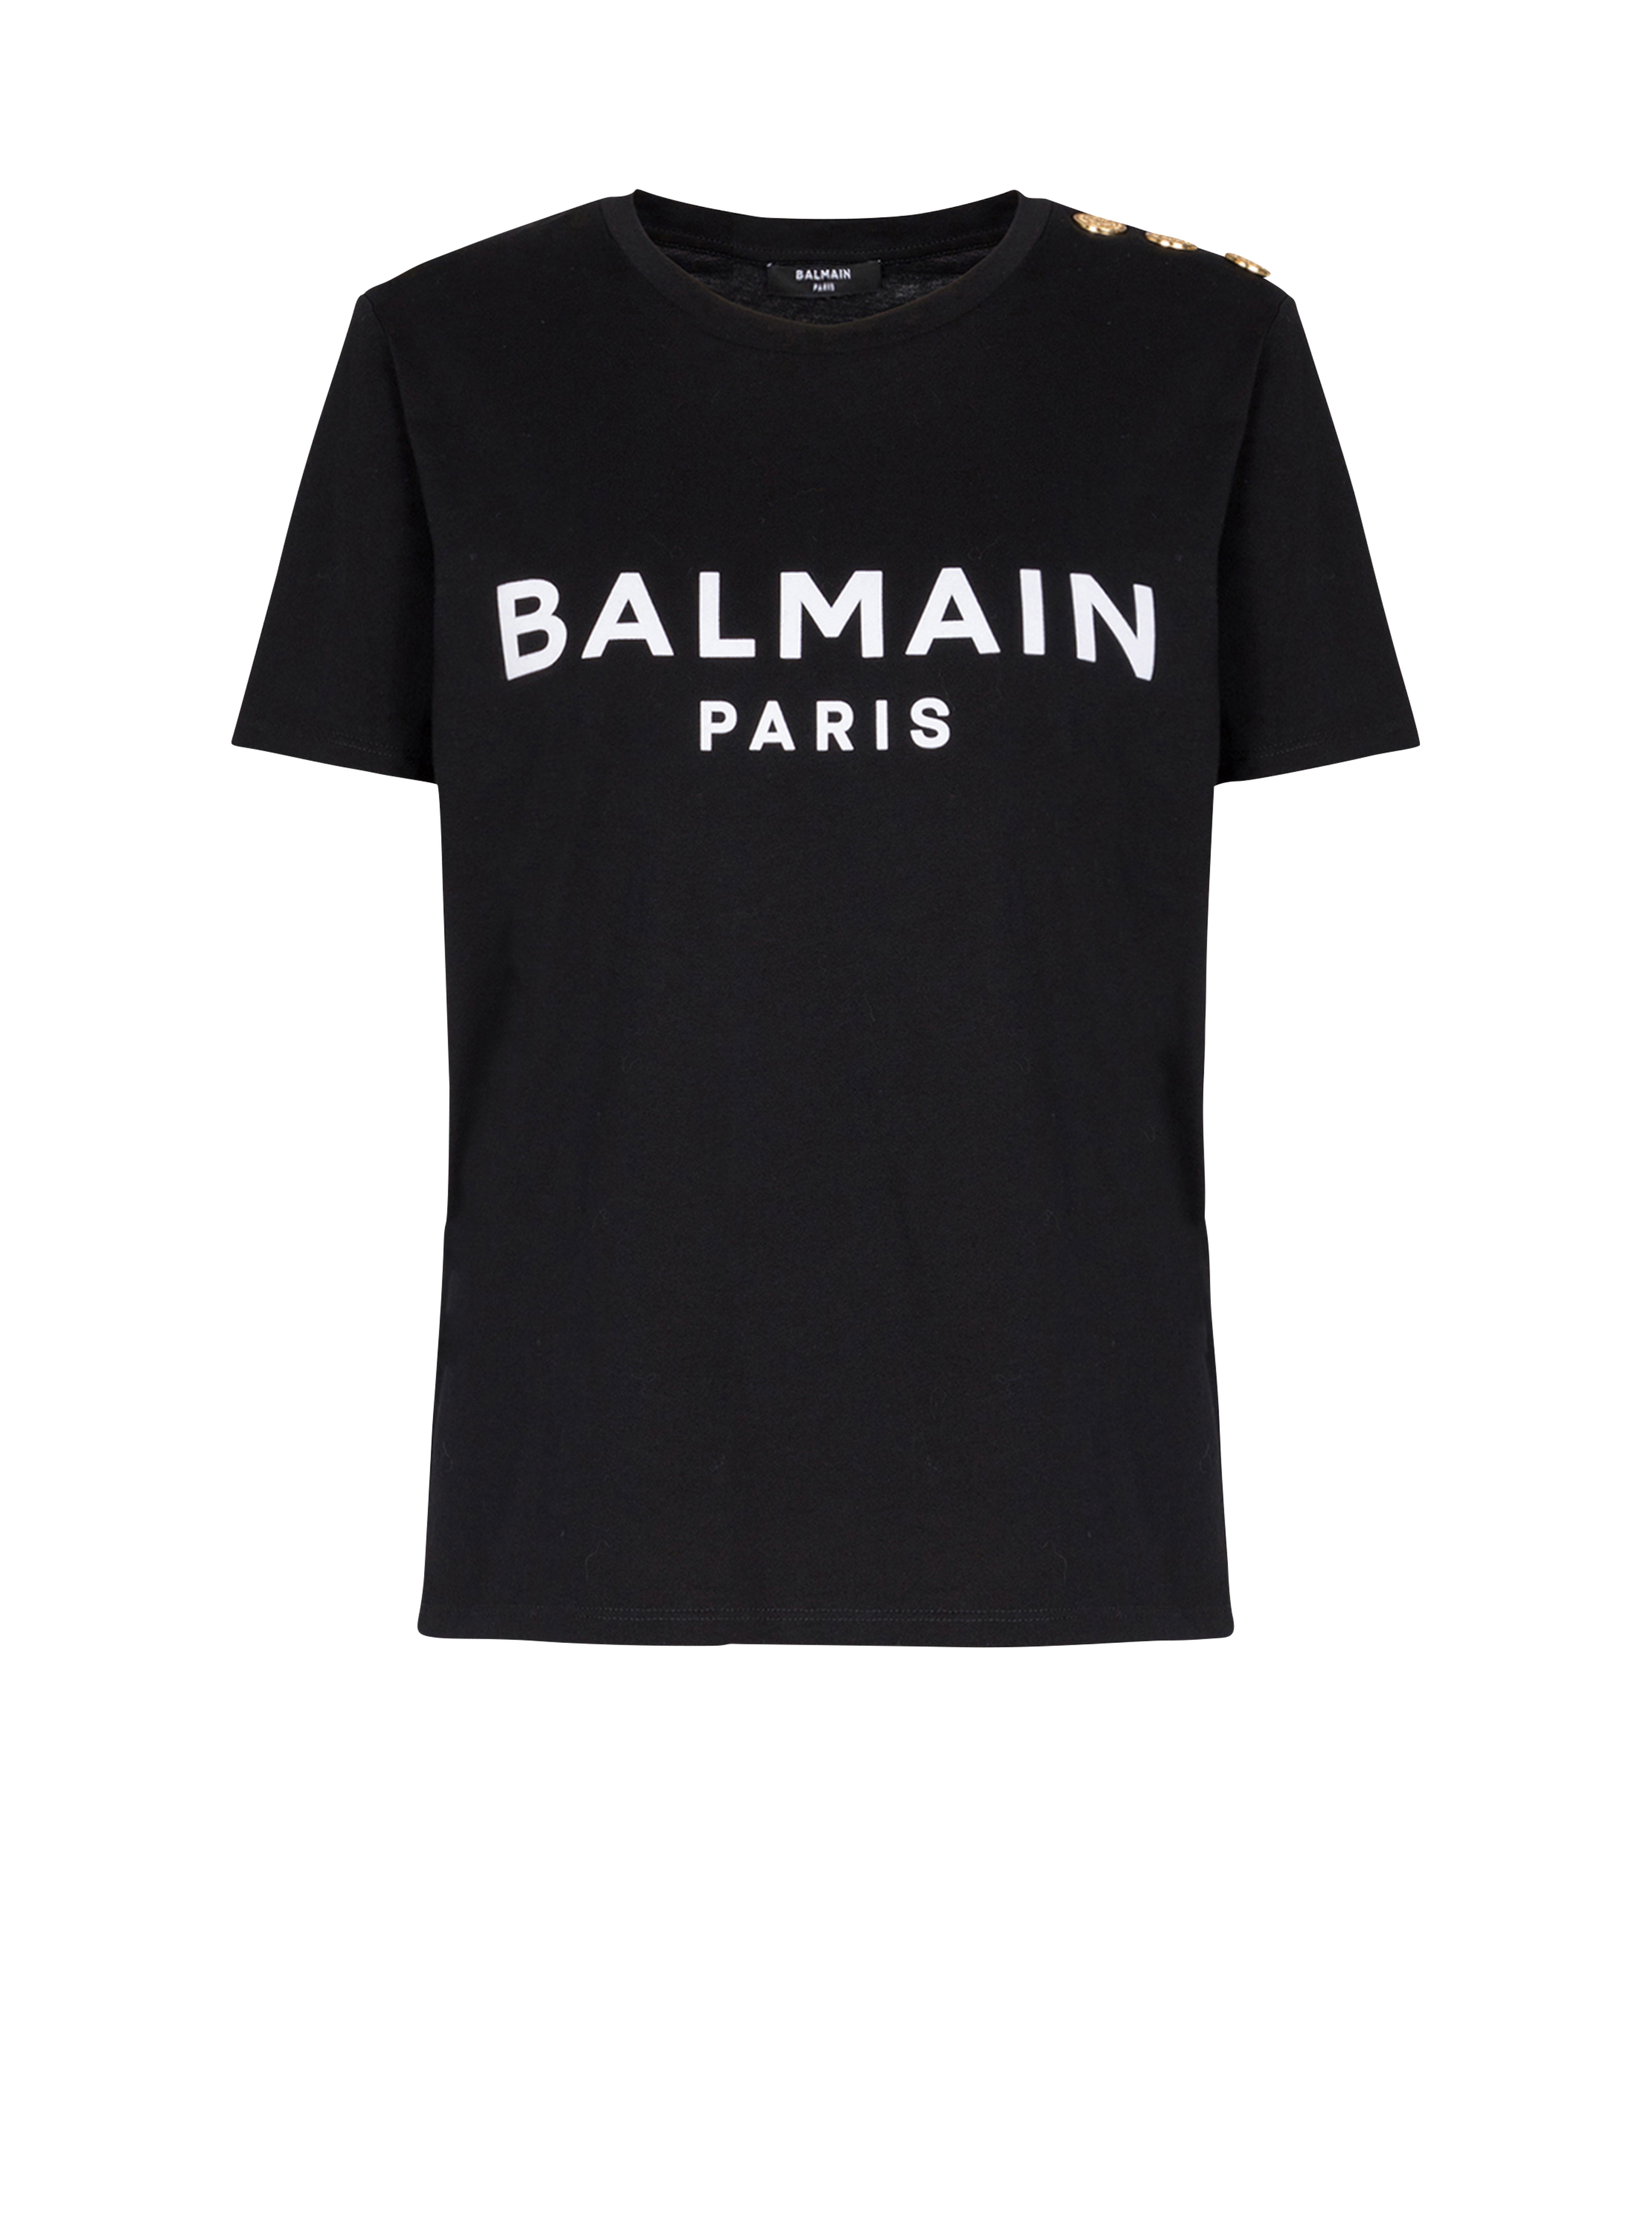 Balmain巴尔曼标志印花环保设计棉质T恤, black